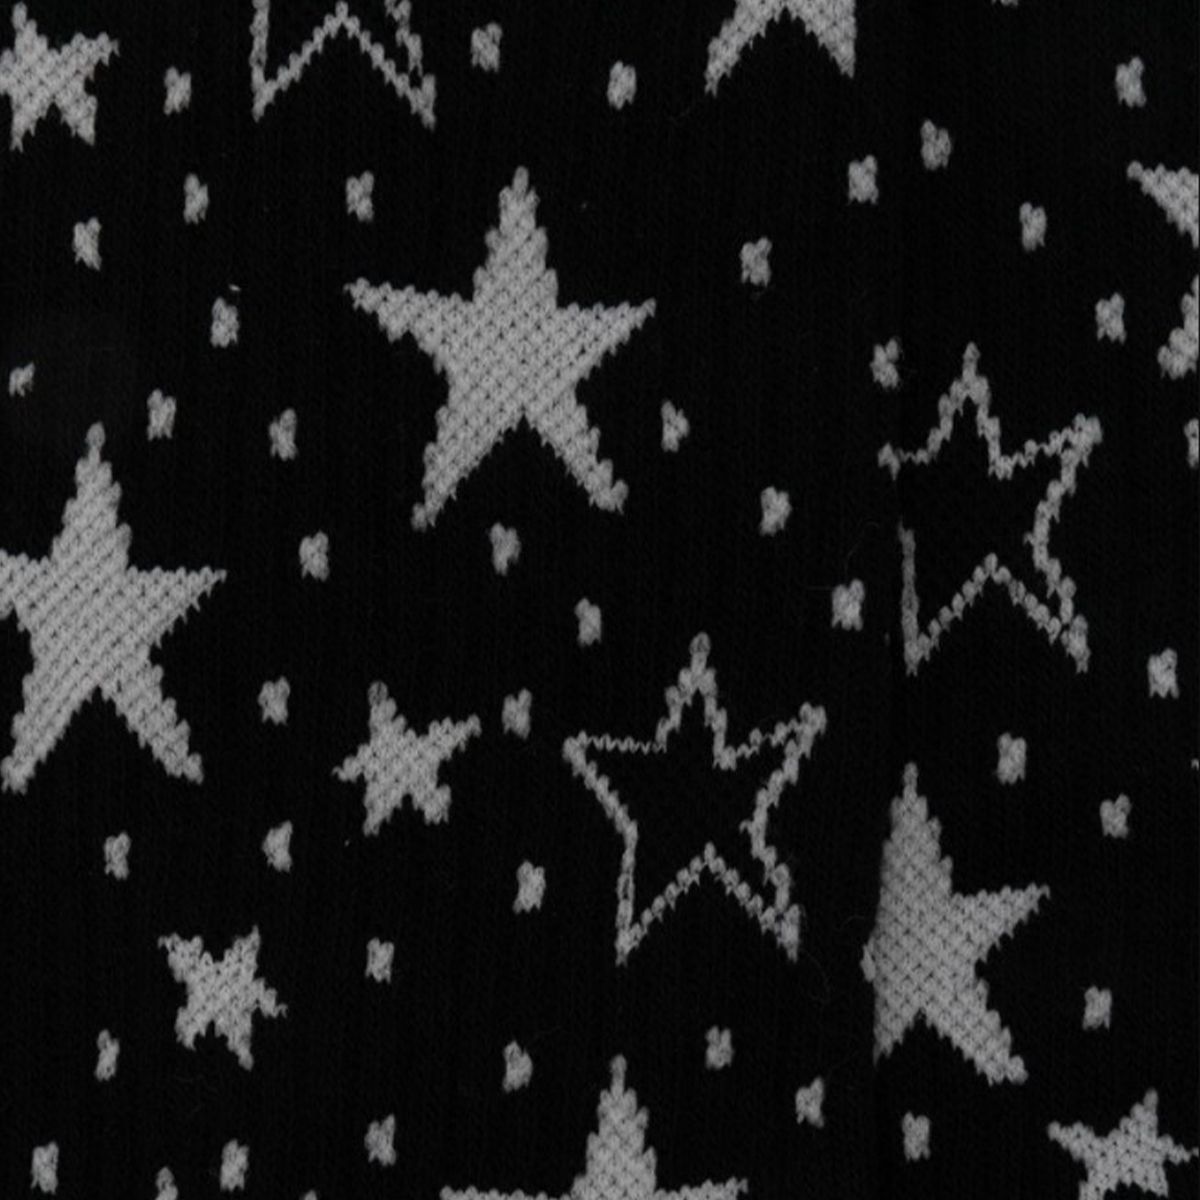 Star-Intarsia Socks